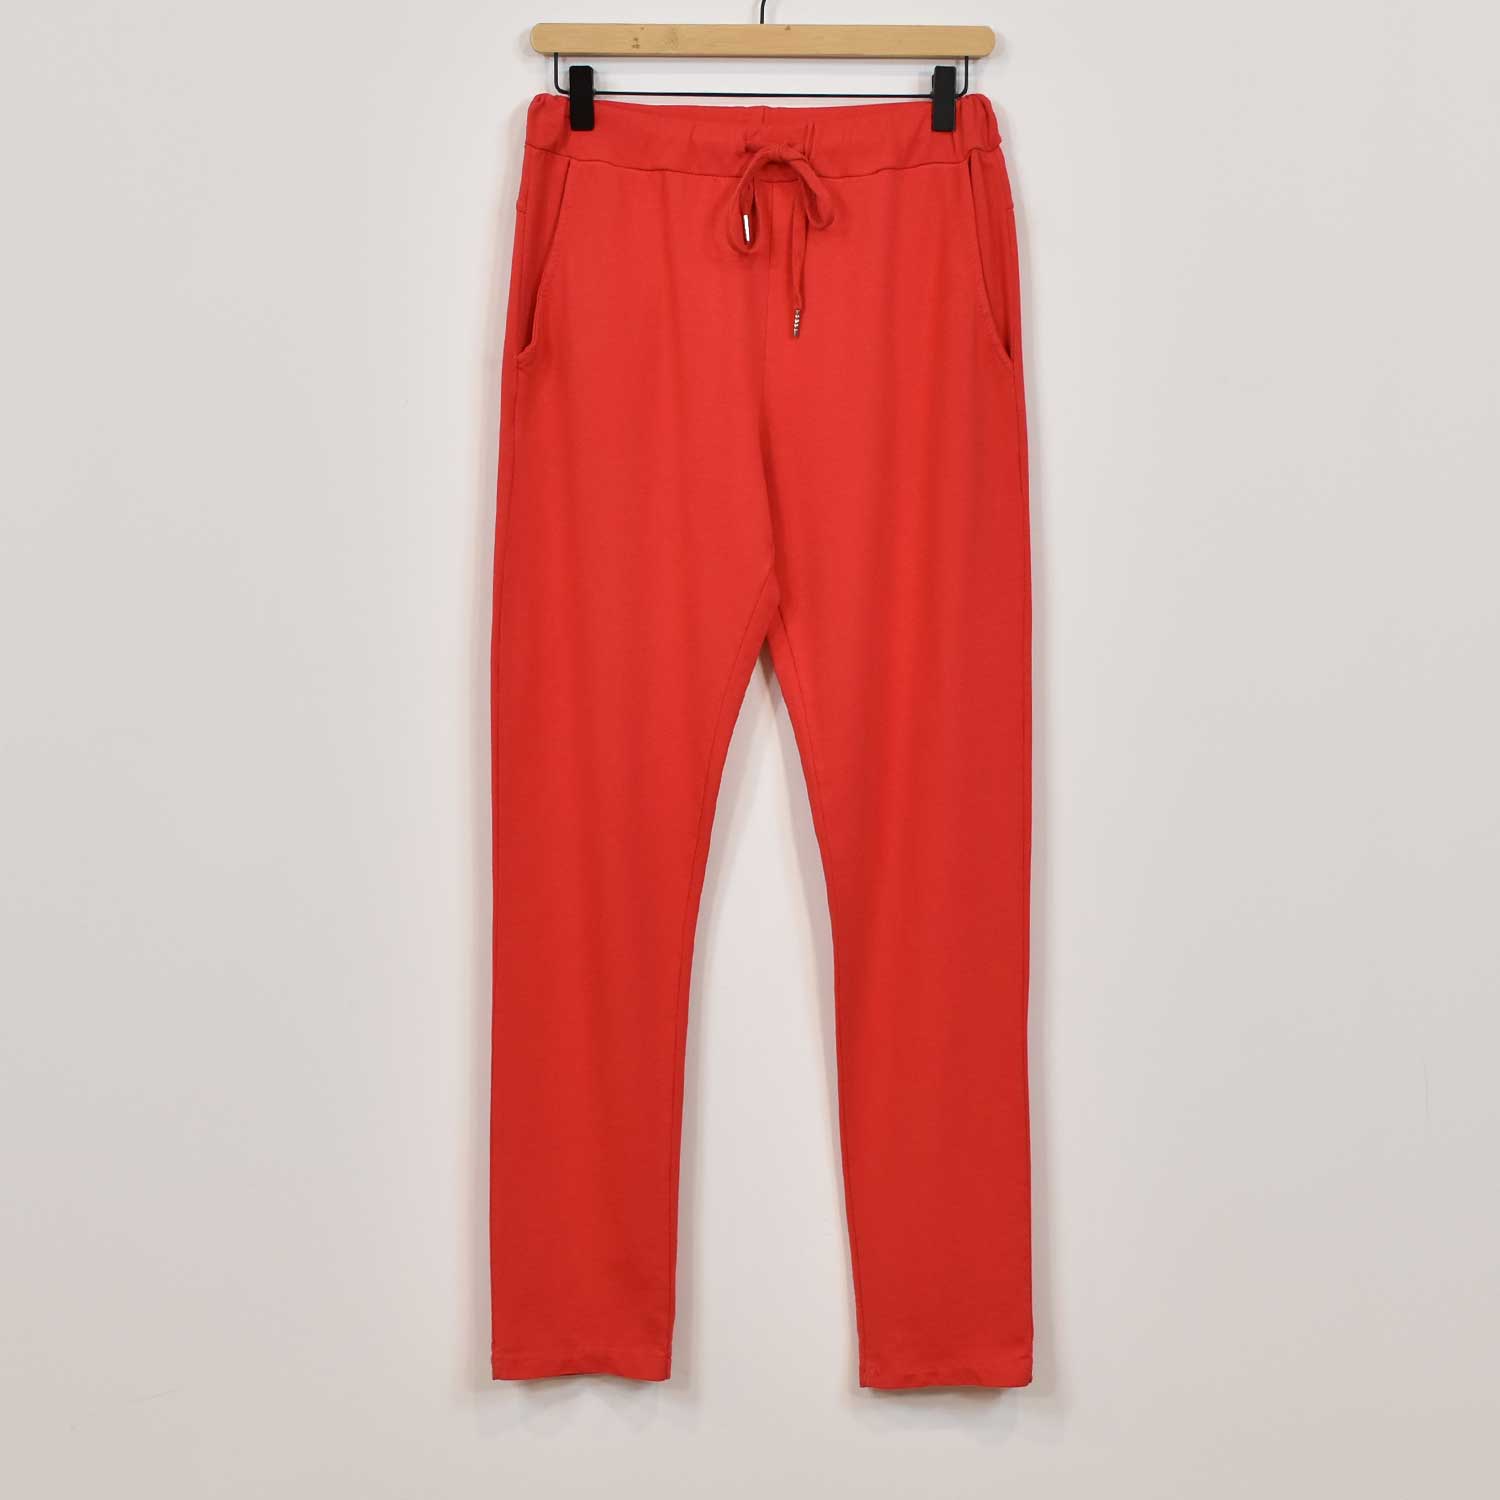 Pantalon Jogging rouge